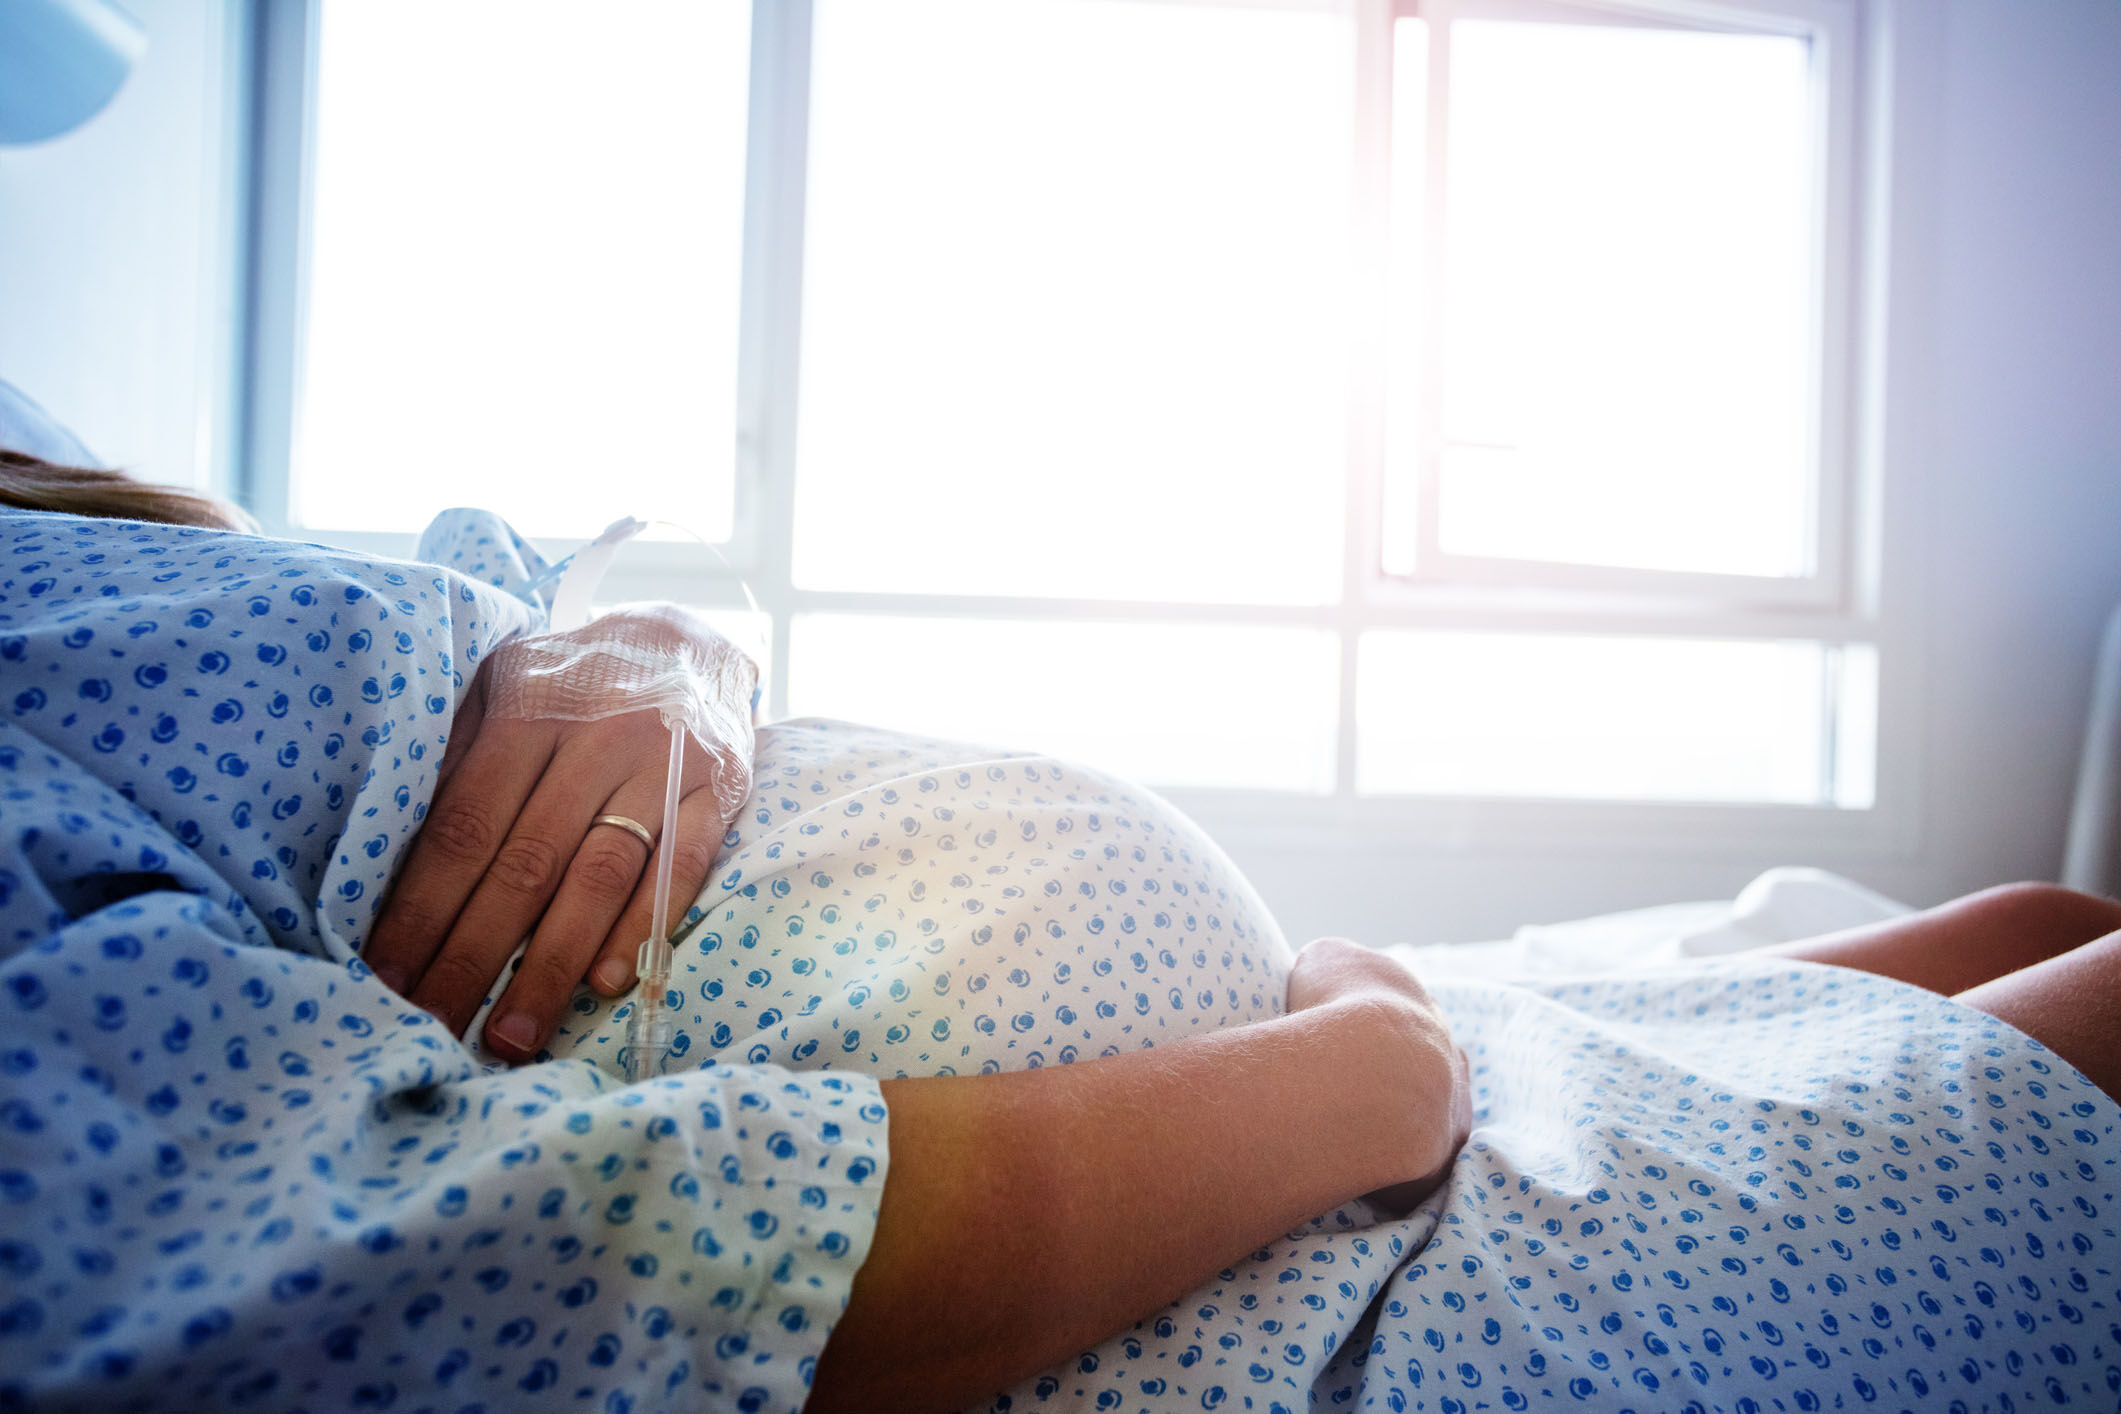 New study investigates childbirth abuse